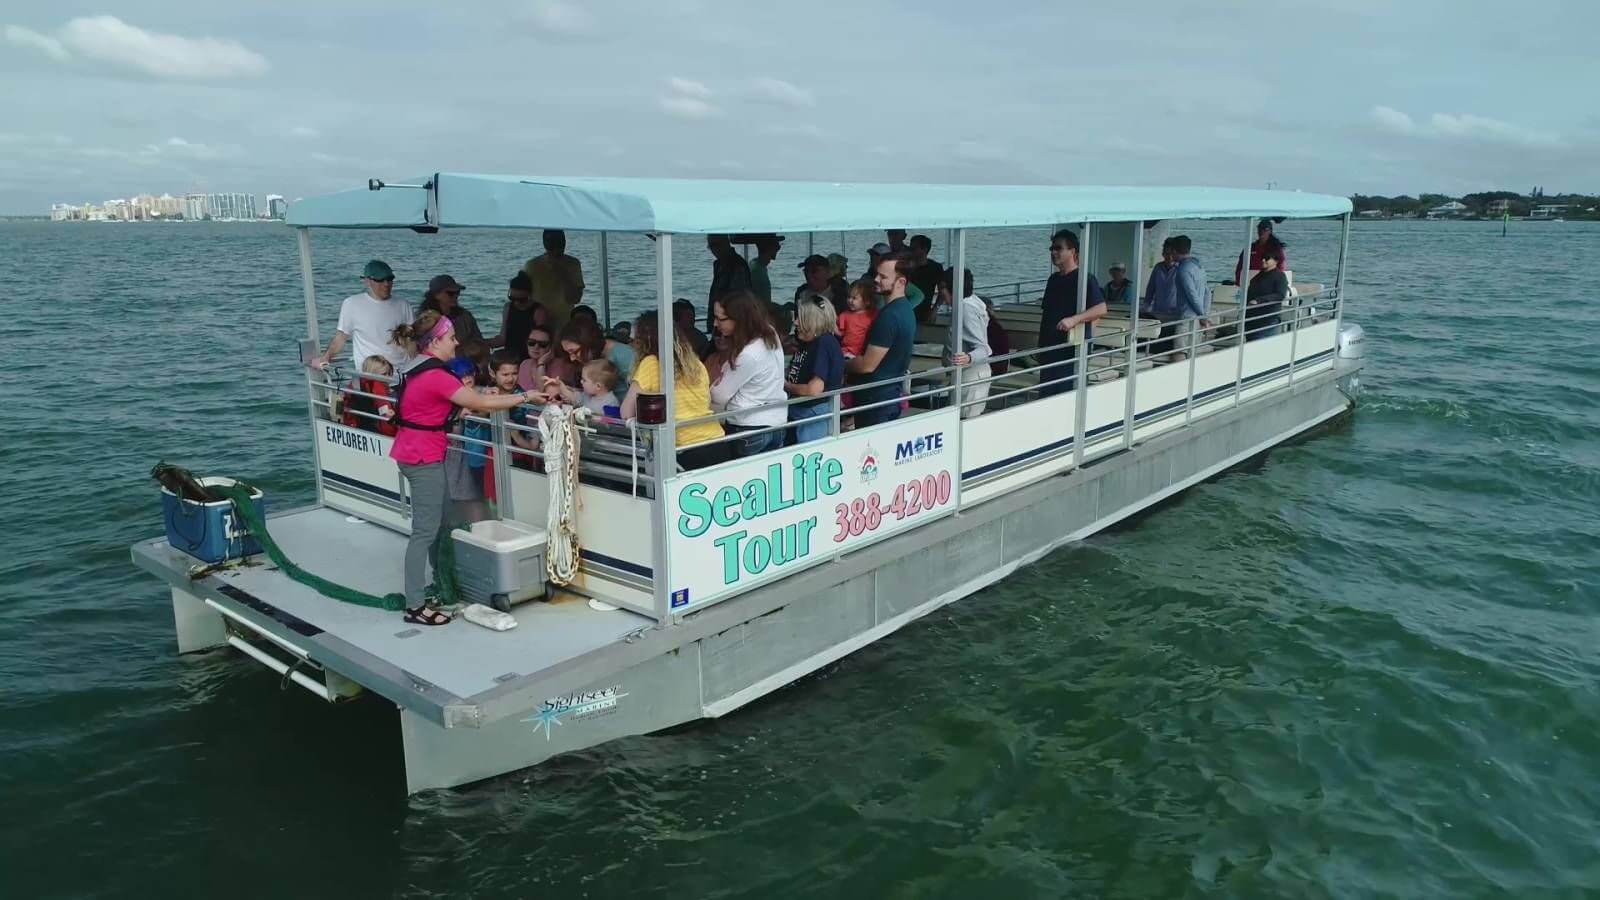 Sarasota Bay Explorers SeaLife Tour boat on the water in Sarasota, Florida